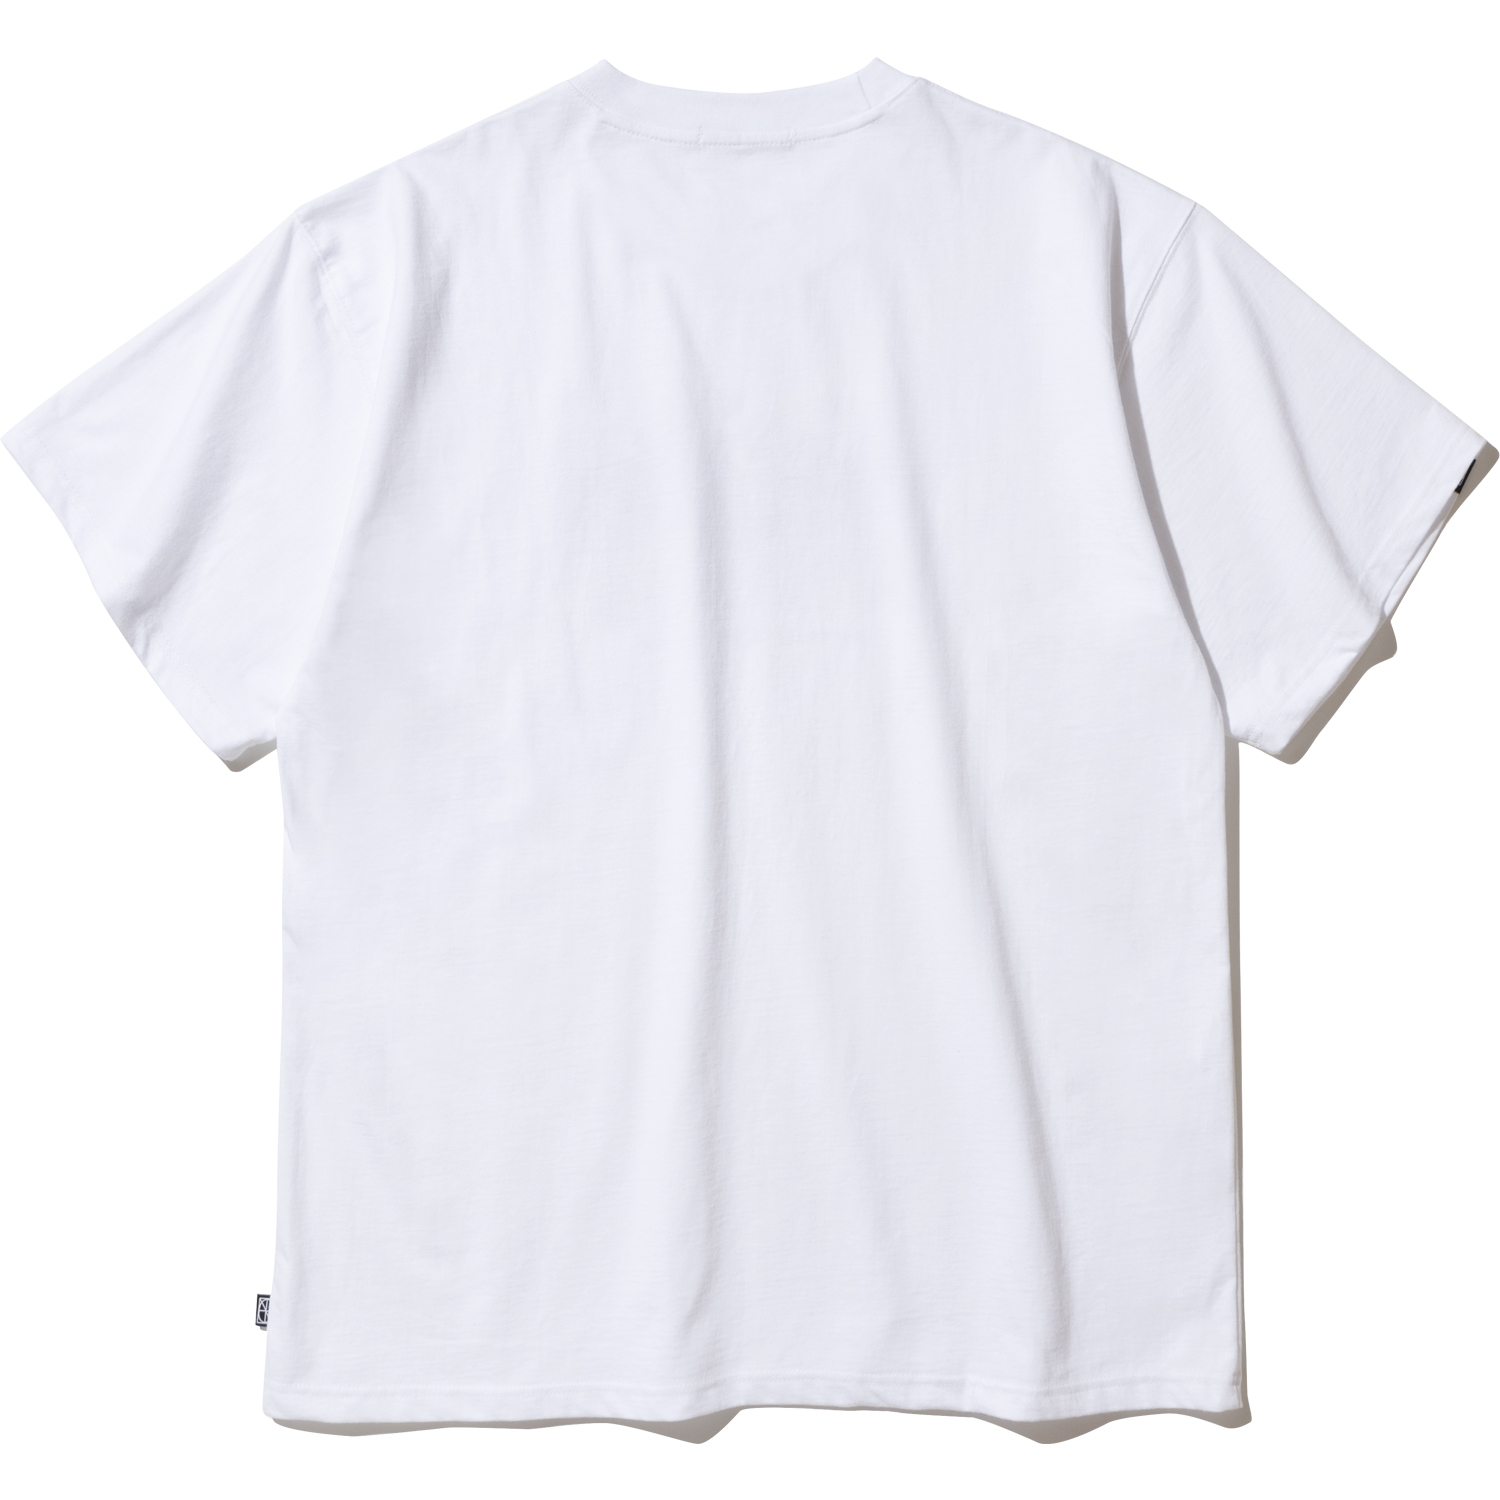 Pick up T-Shirts - White,NOT4NERD